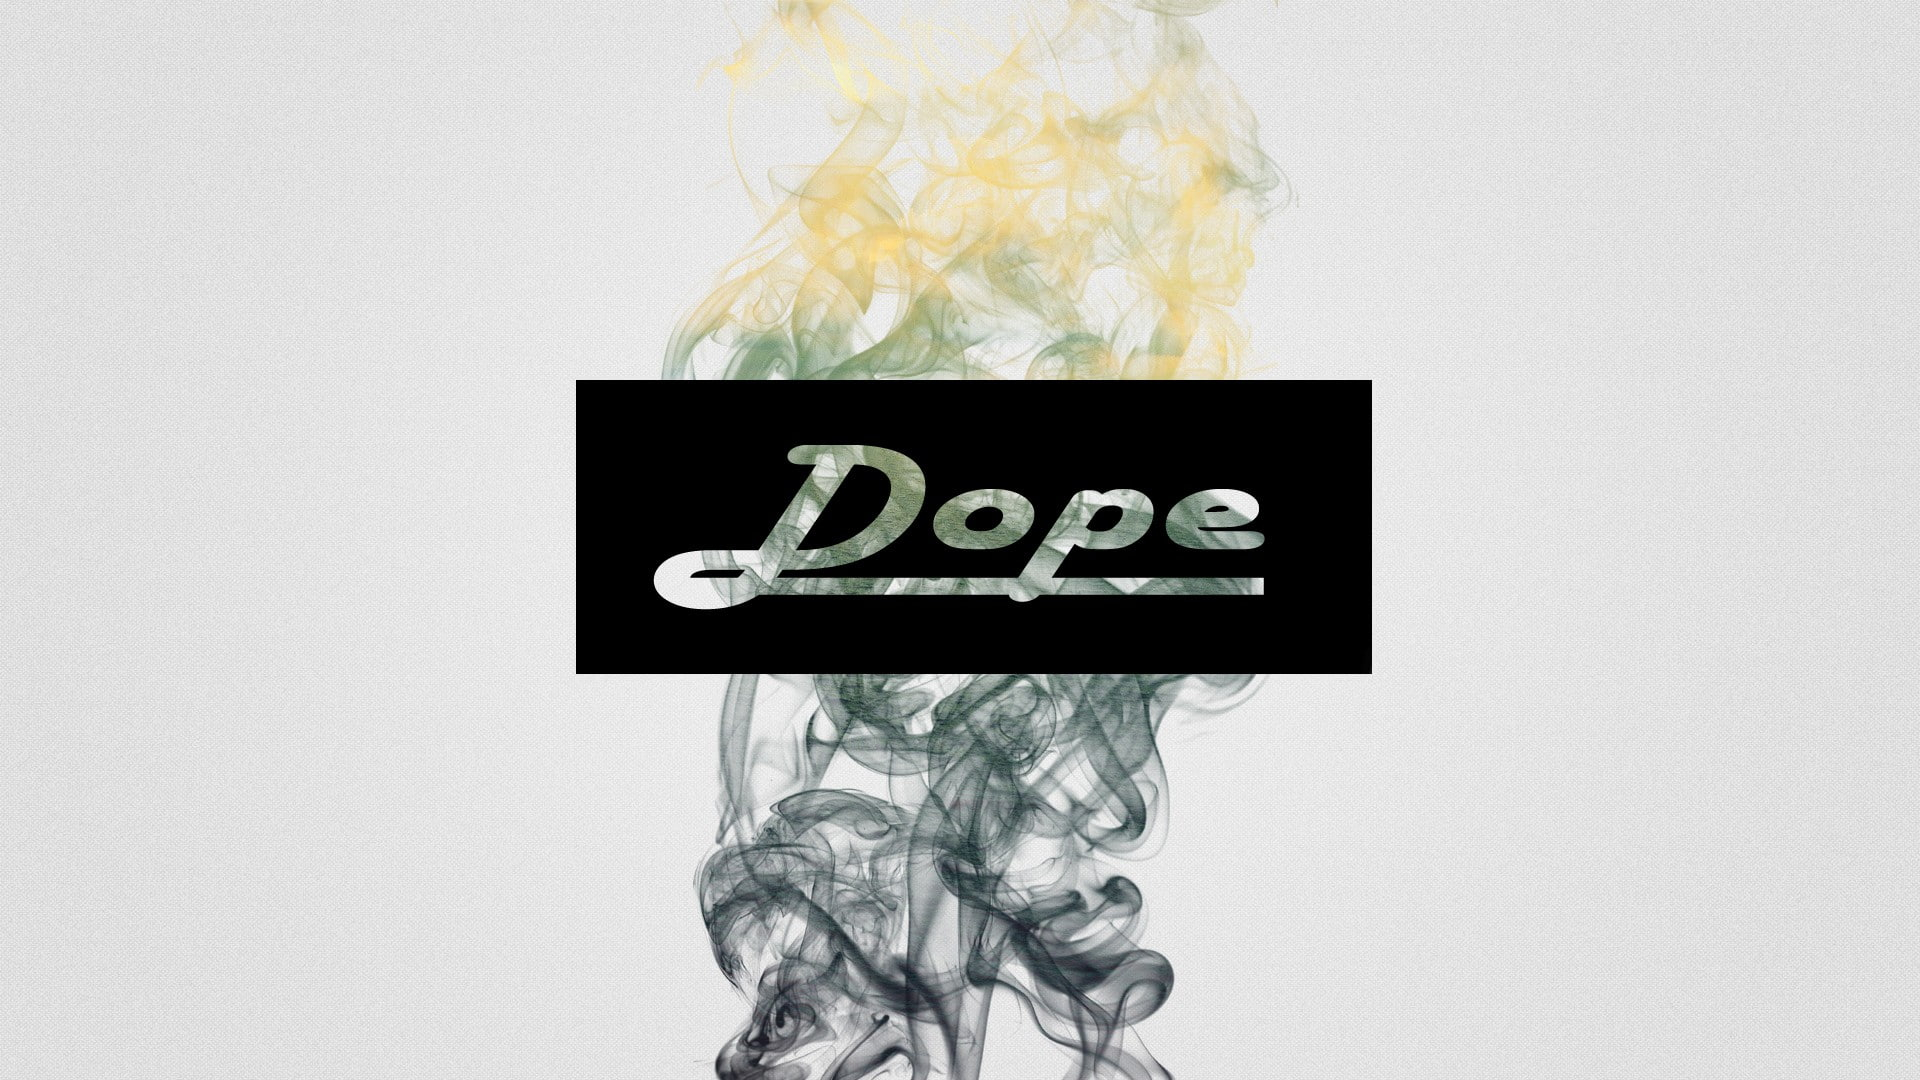 Dope wallpaper, smoke, white, simple background